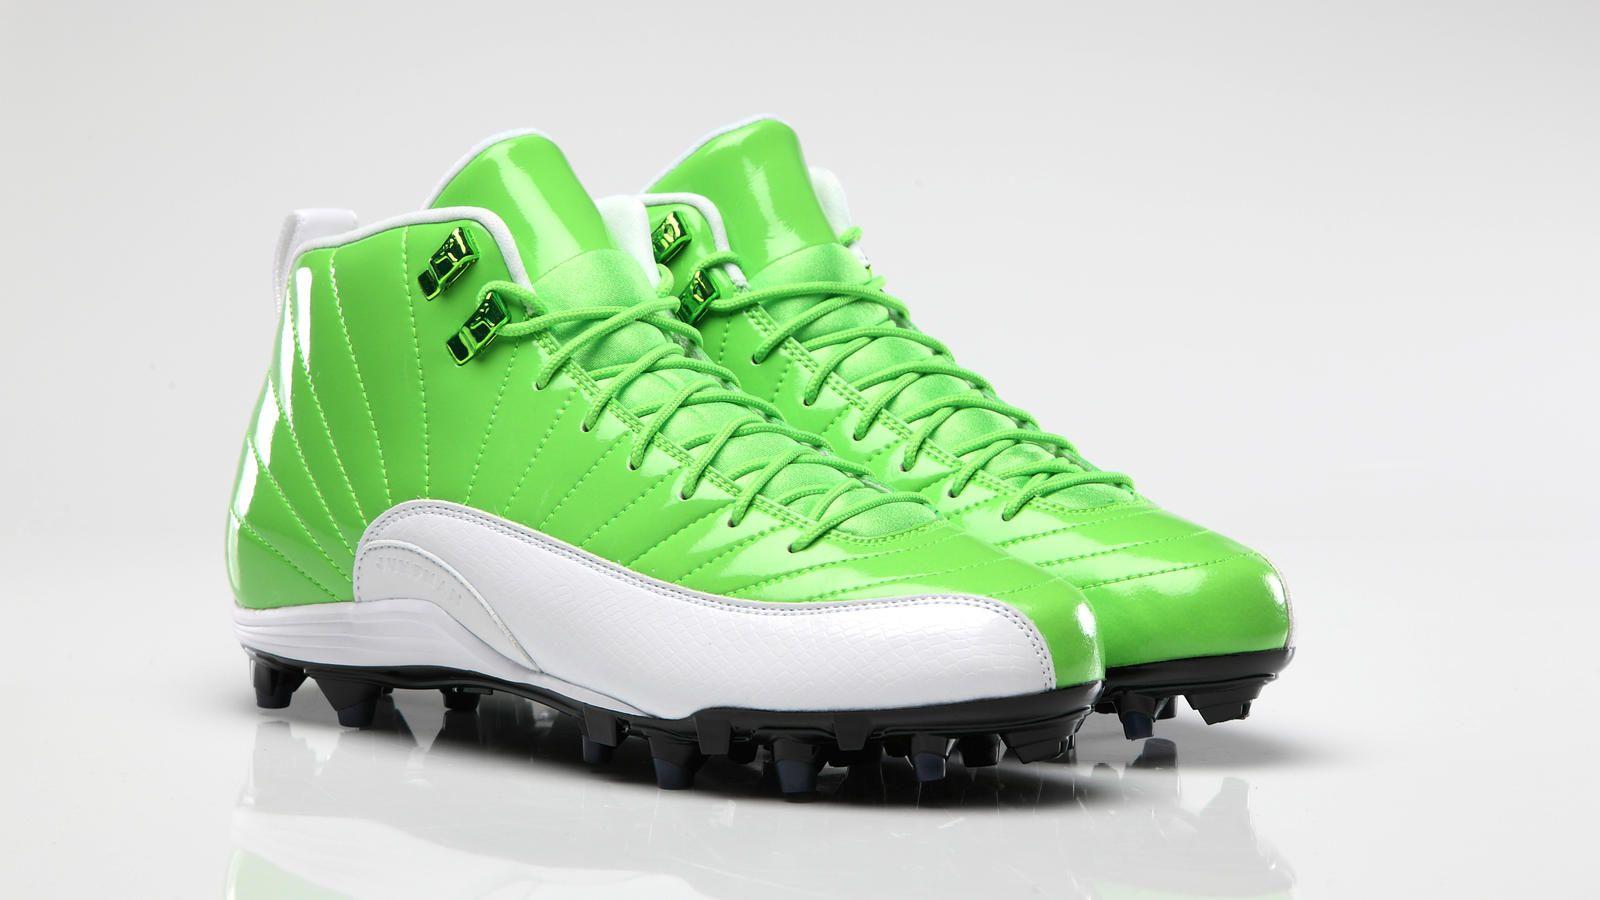 Lime Green Jordan Logo - Jordan Brand Football Athletes to Wear Air Jordan XII Cleats - Nike News